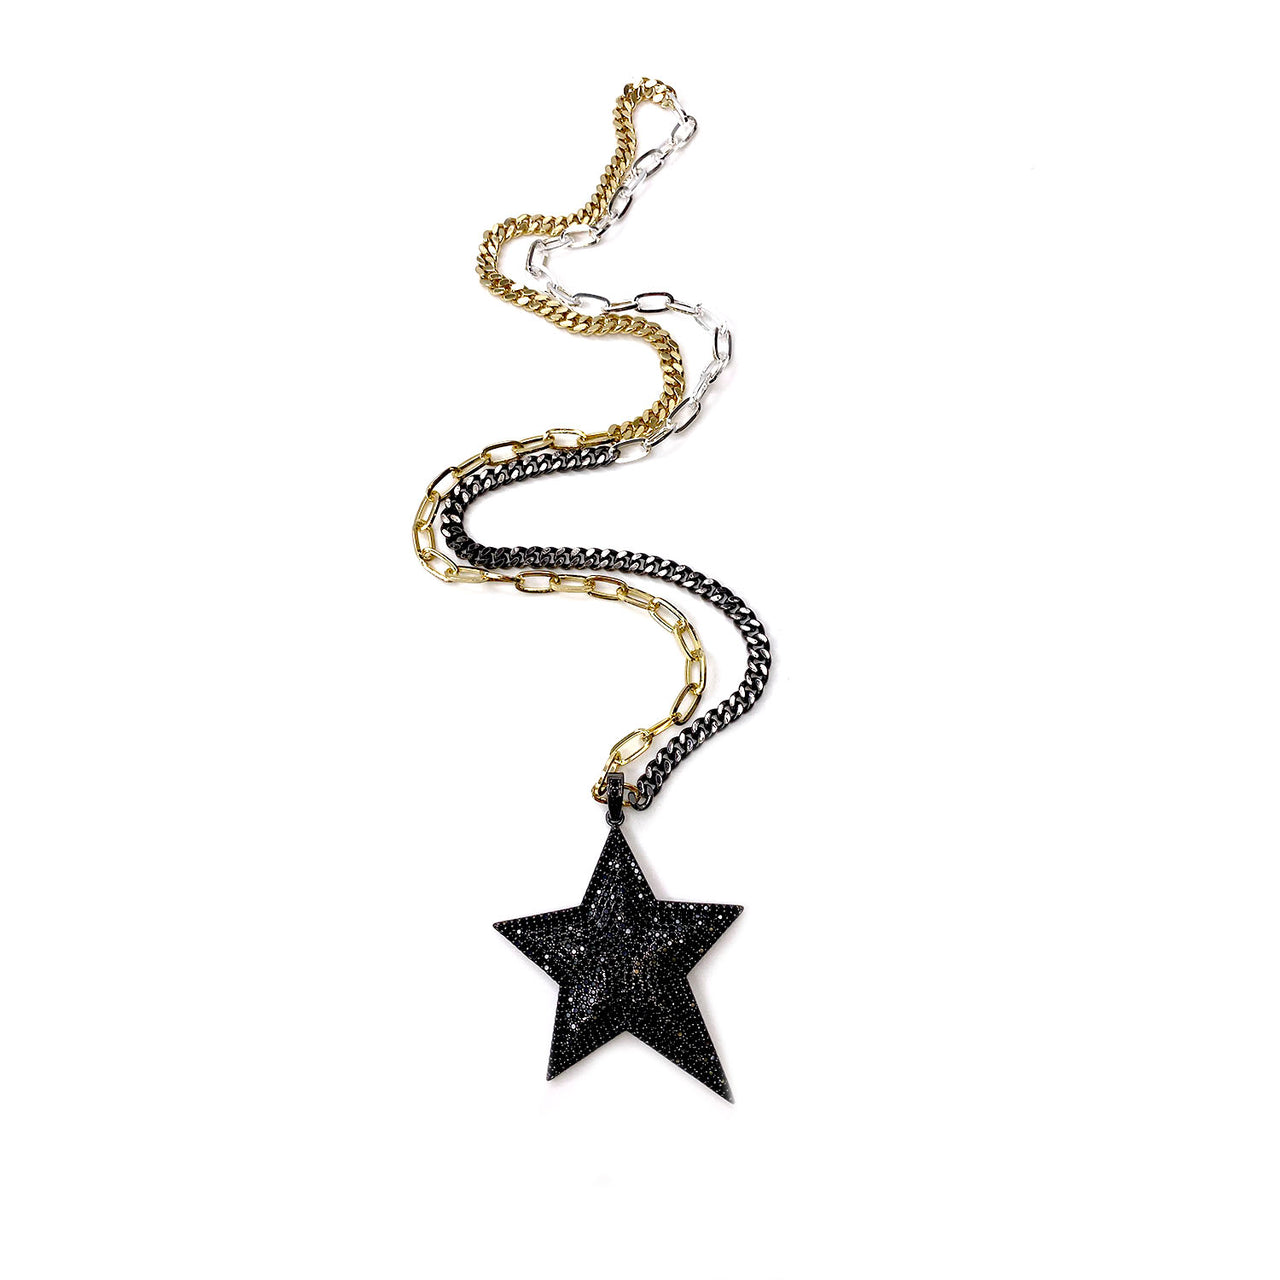 Lisa's Sparkling Star Necklace